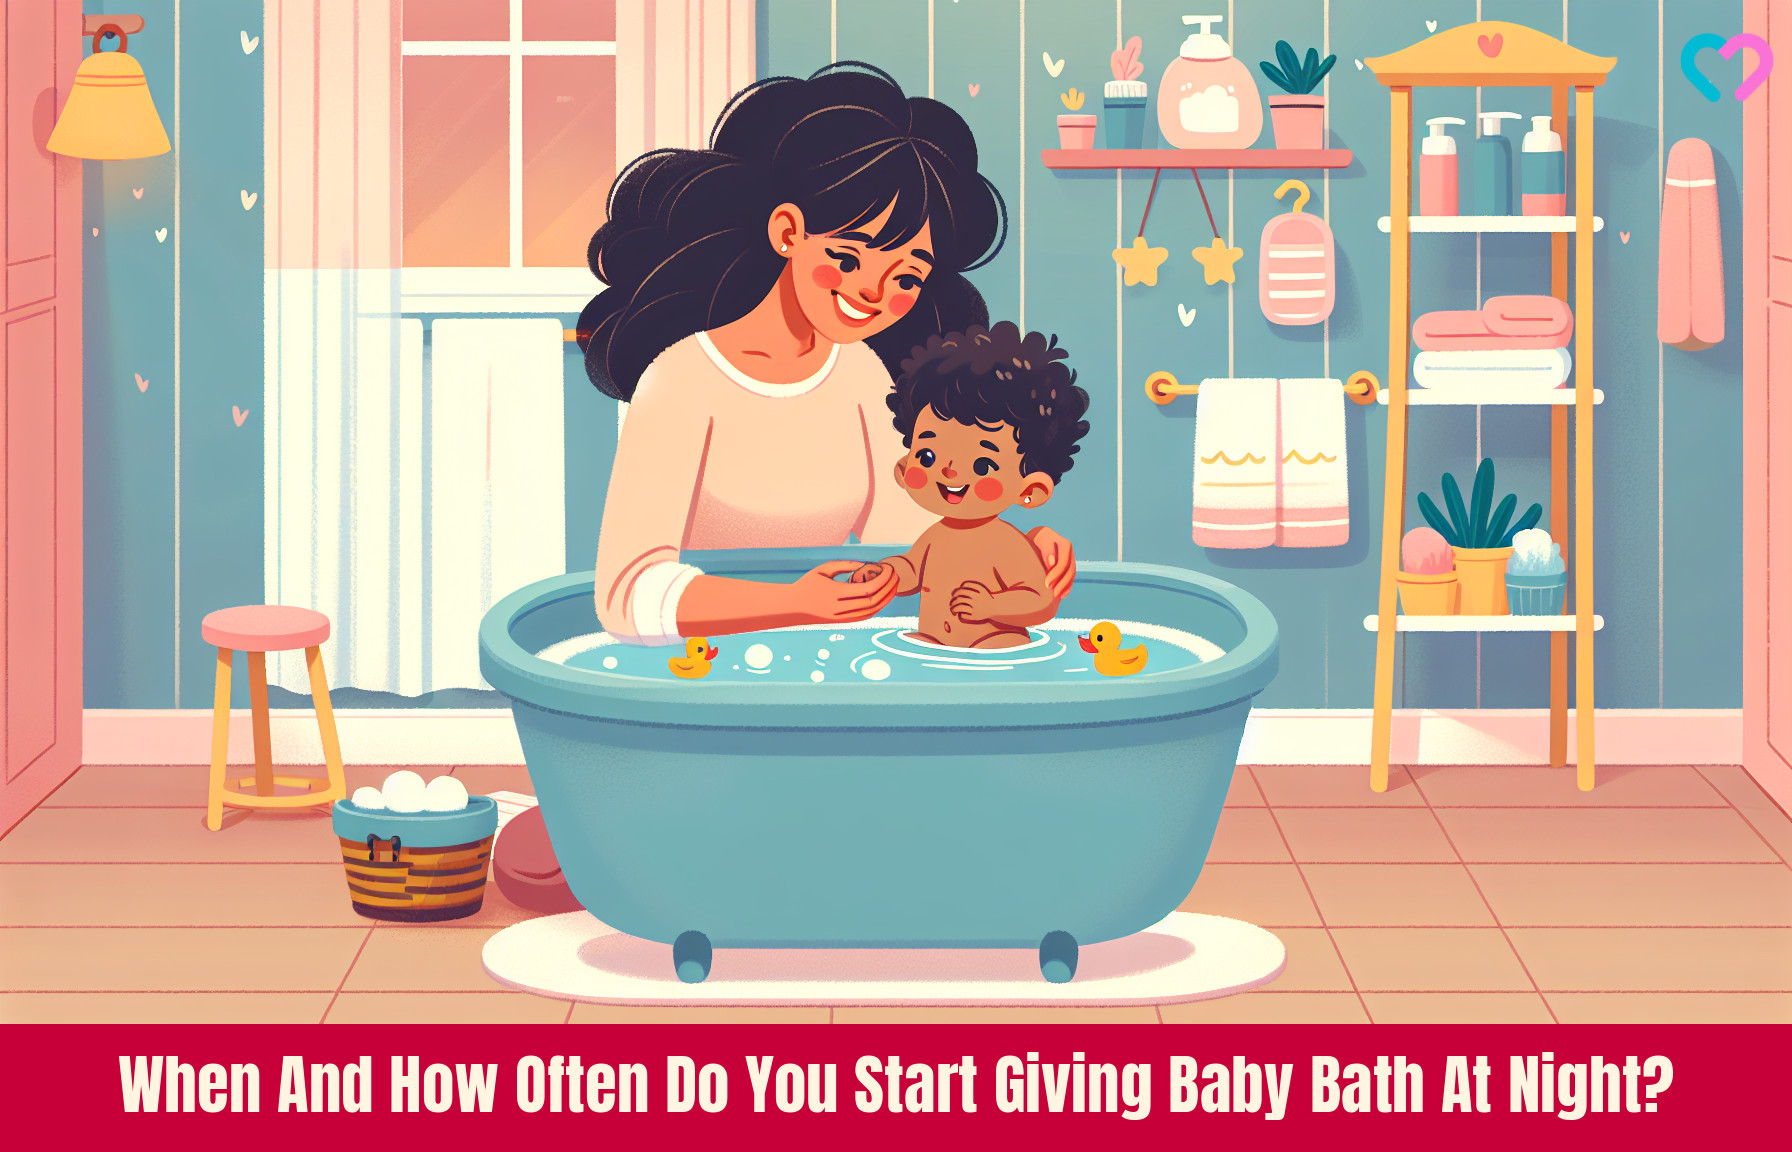 Giving Baby Bath At Night_illustration